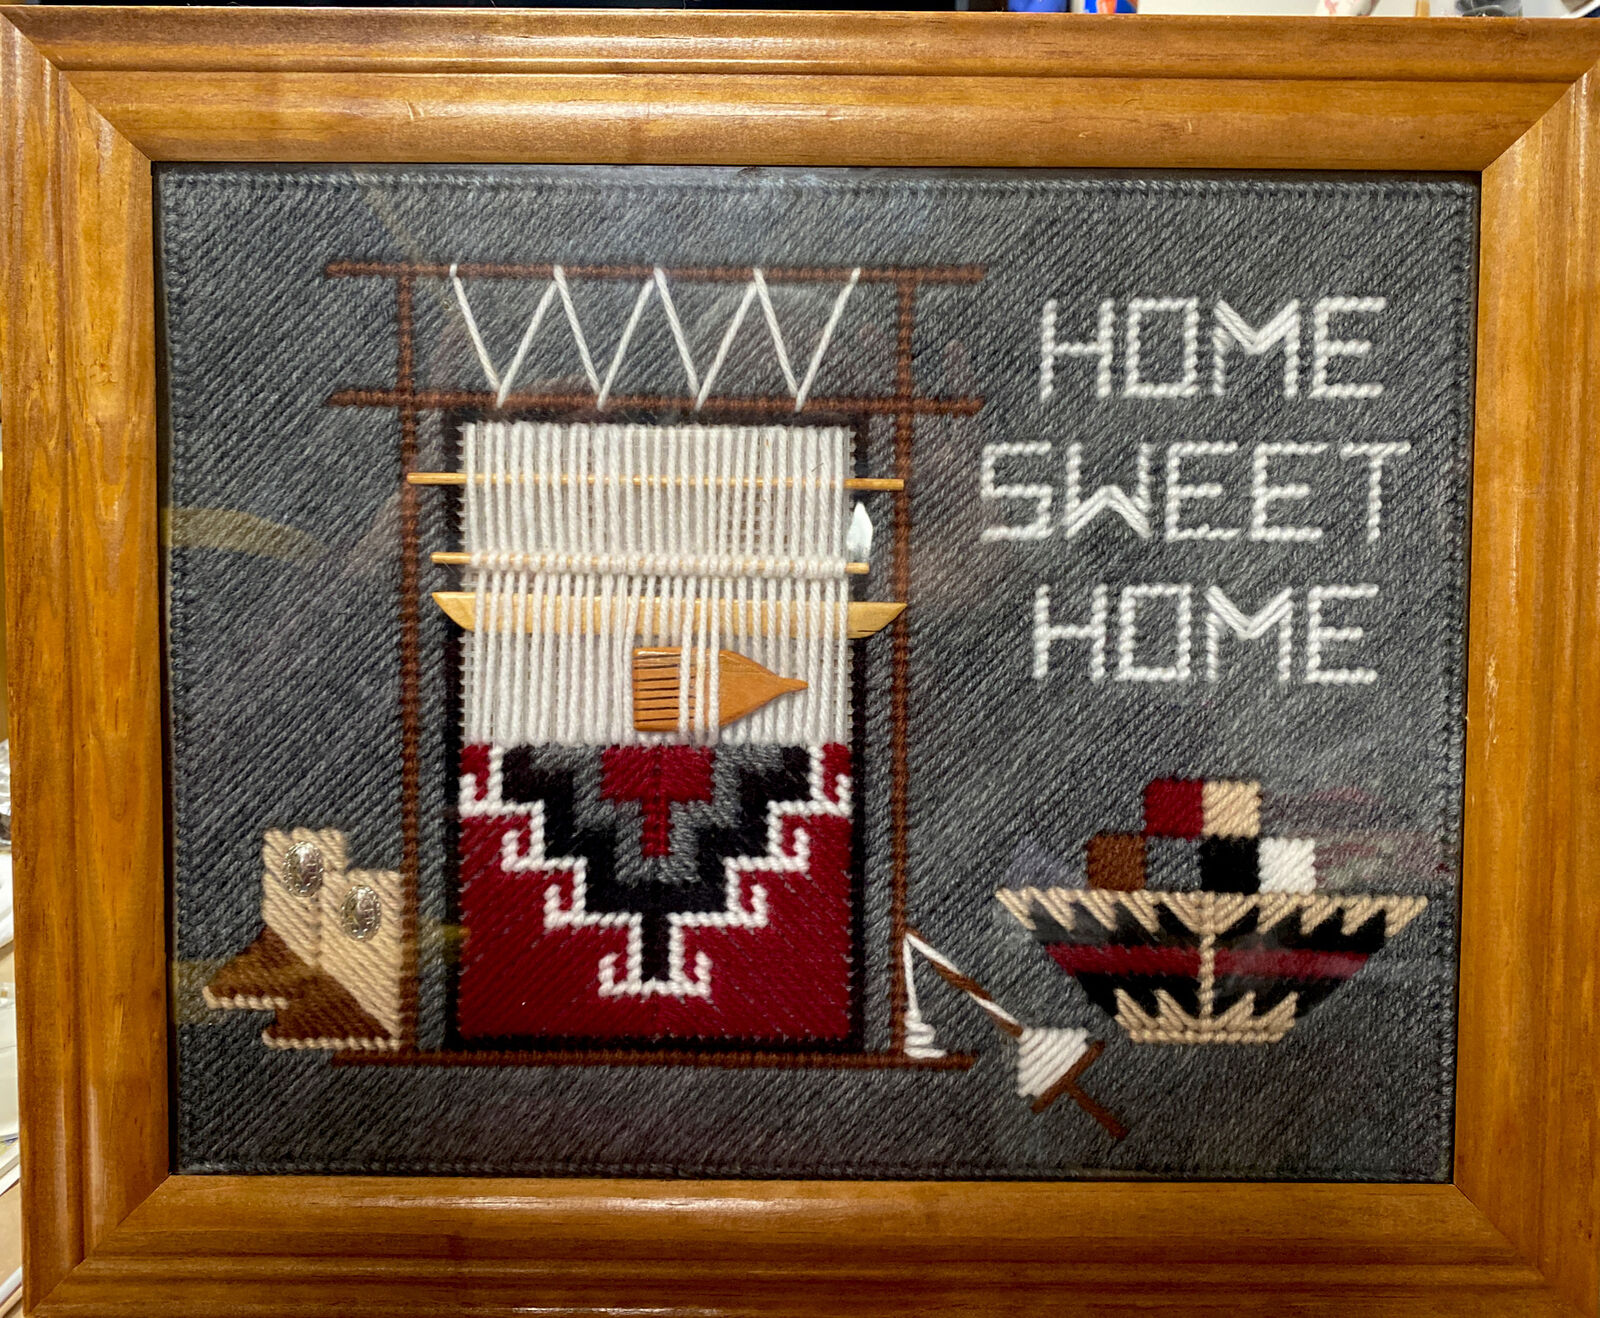 Native Art, “Home Sweet Home”, Needlework, Art Work,  Handcrafted